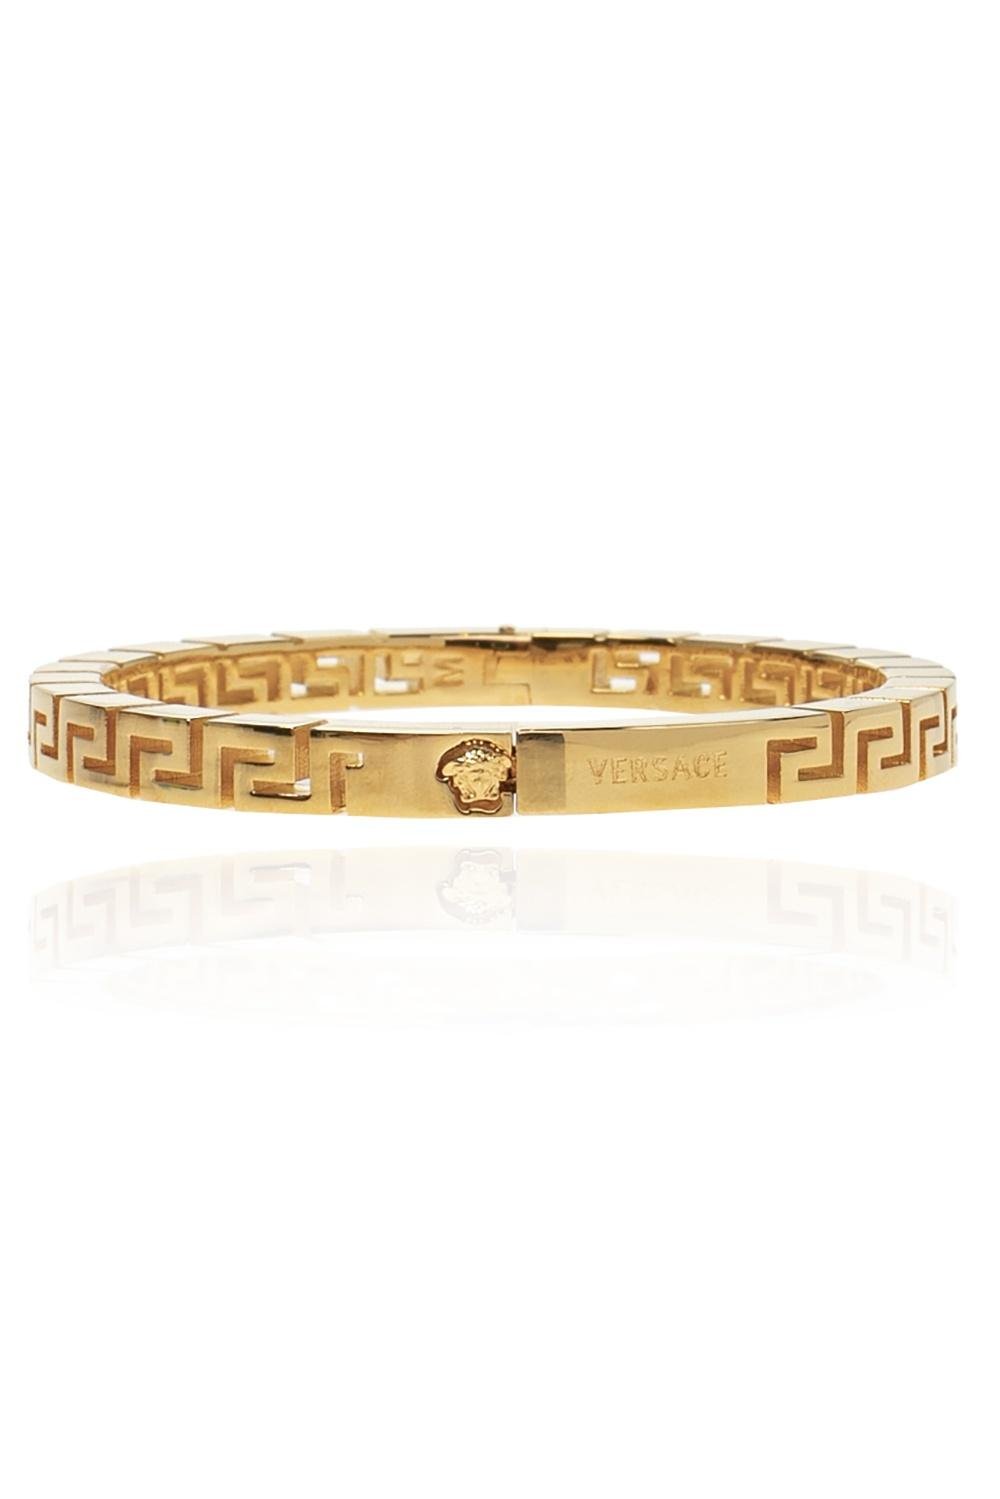 Versace Bracelet With Logo Gold in Metallic - Lyst